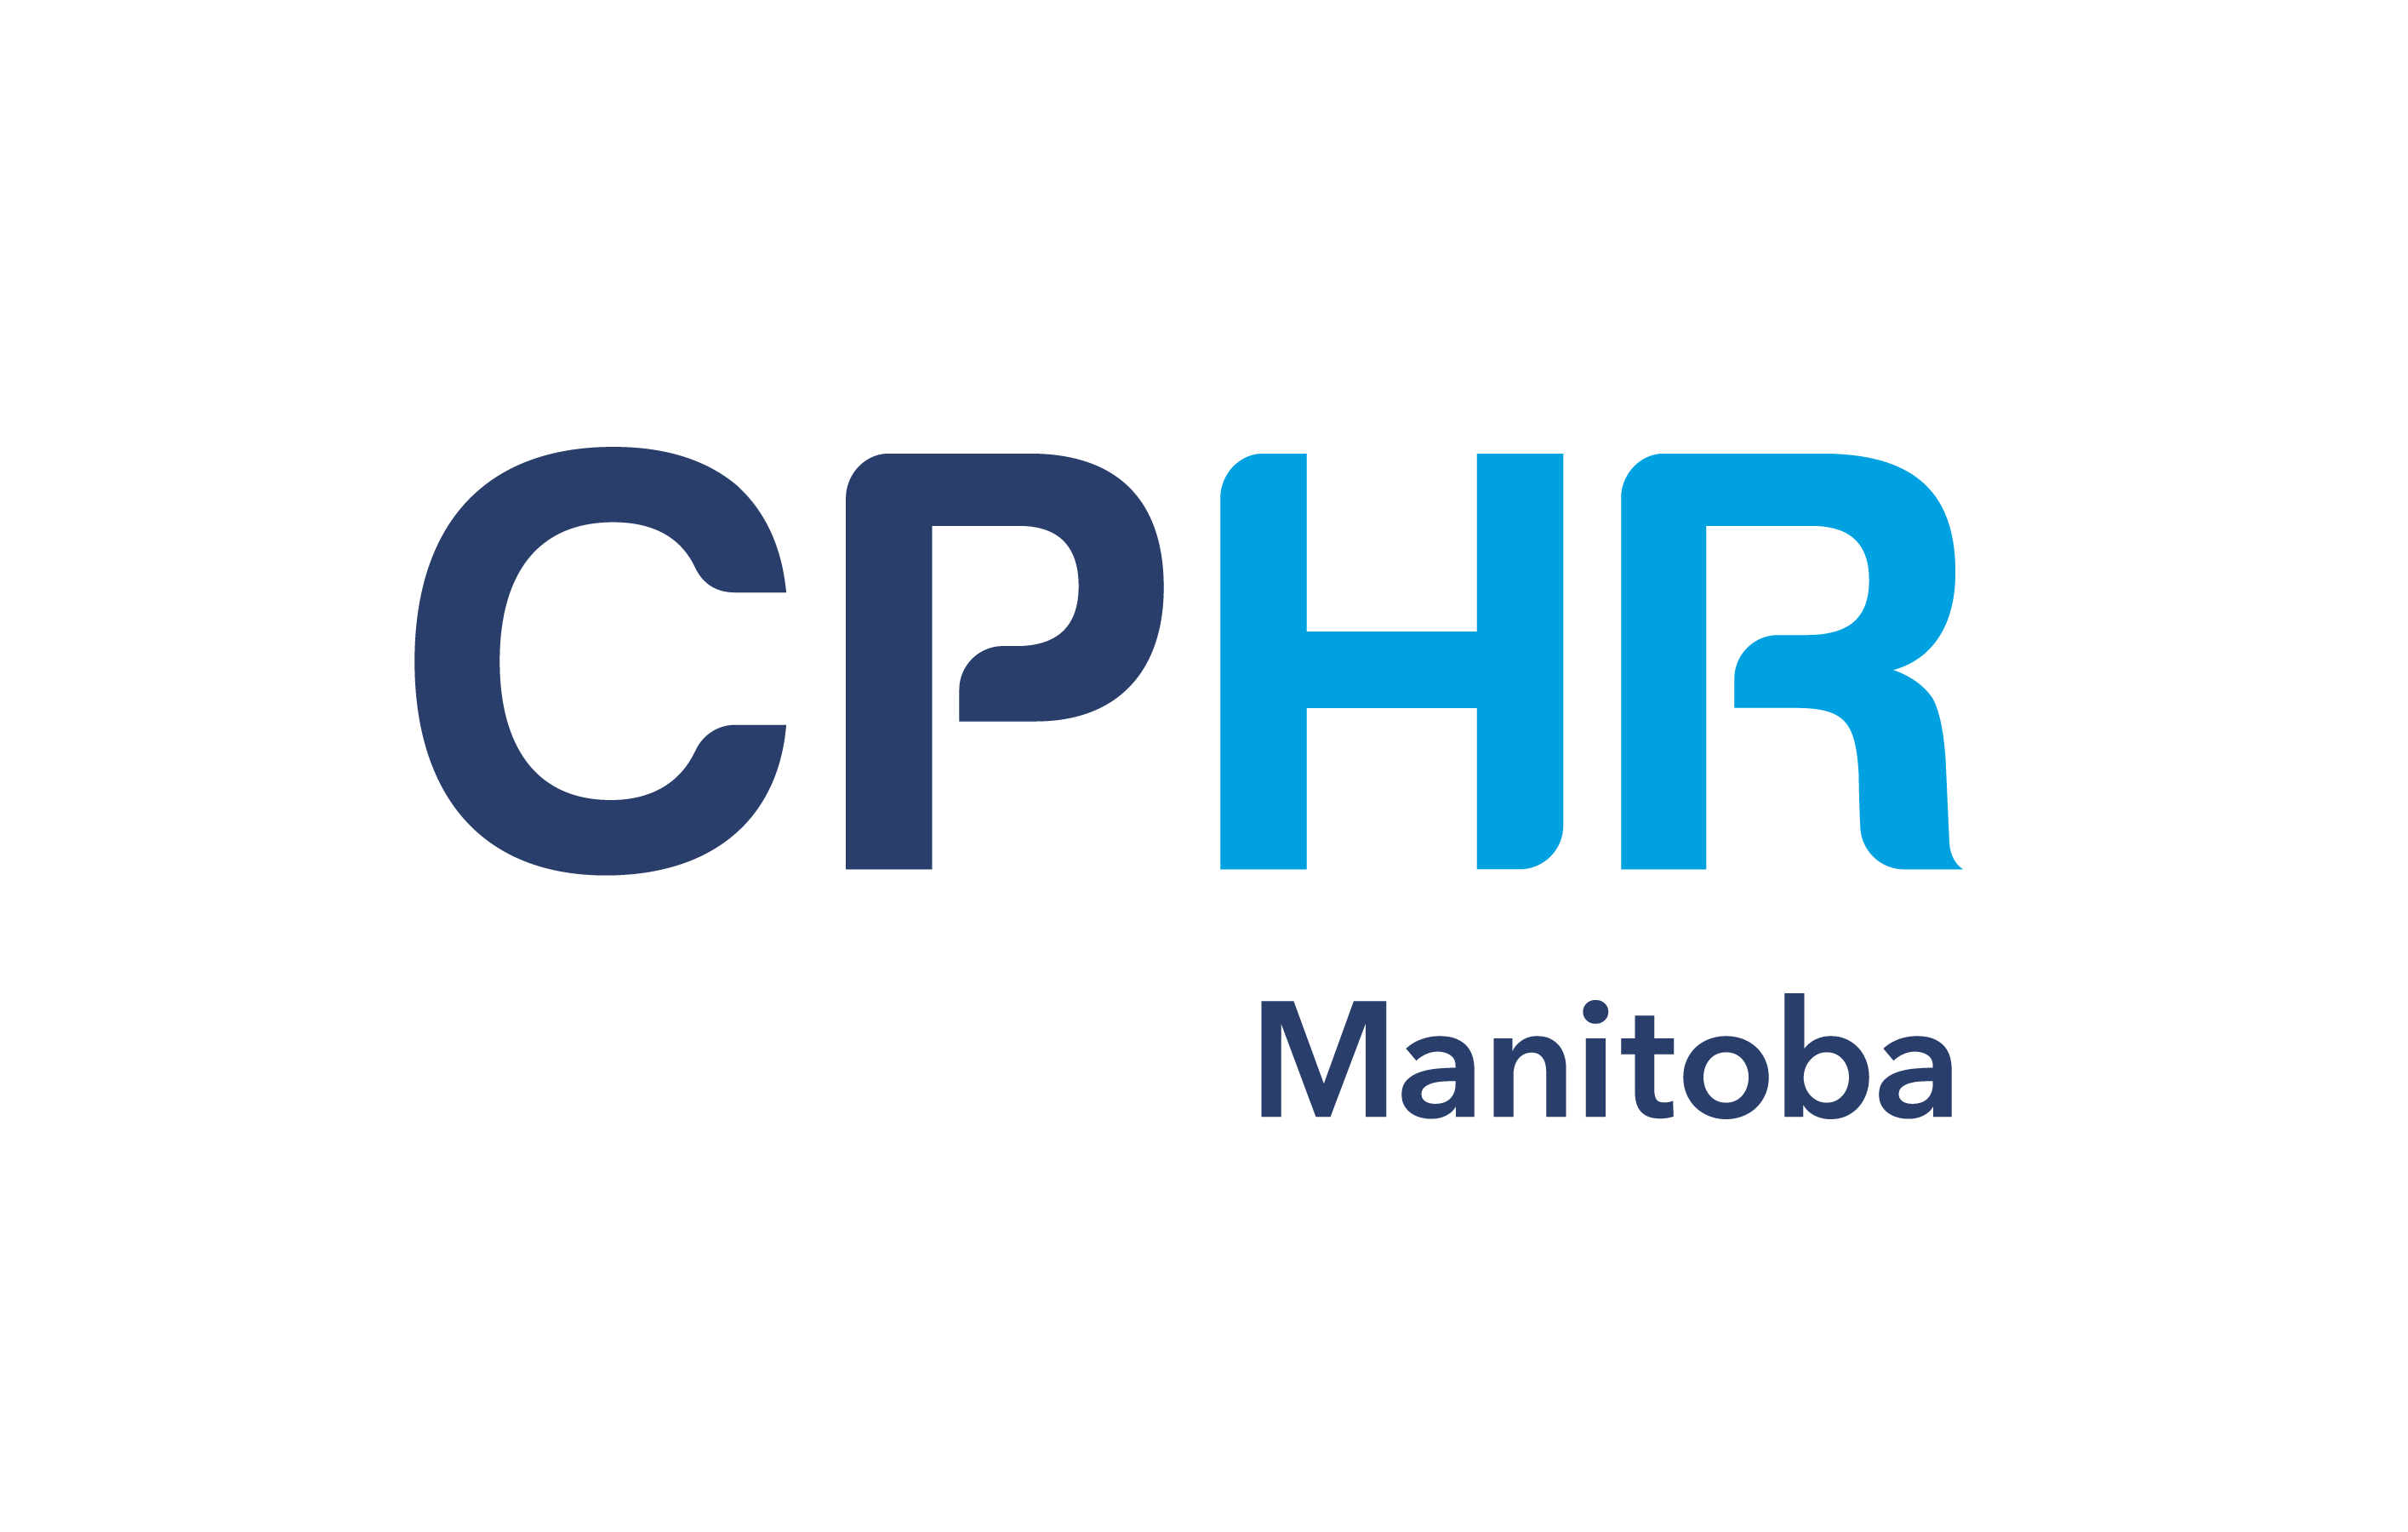 Cphr logo m